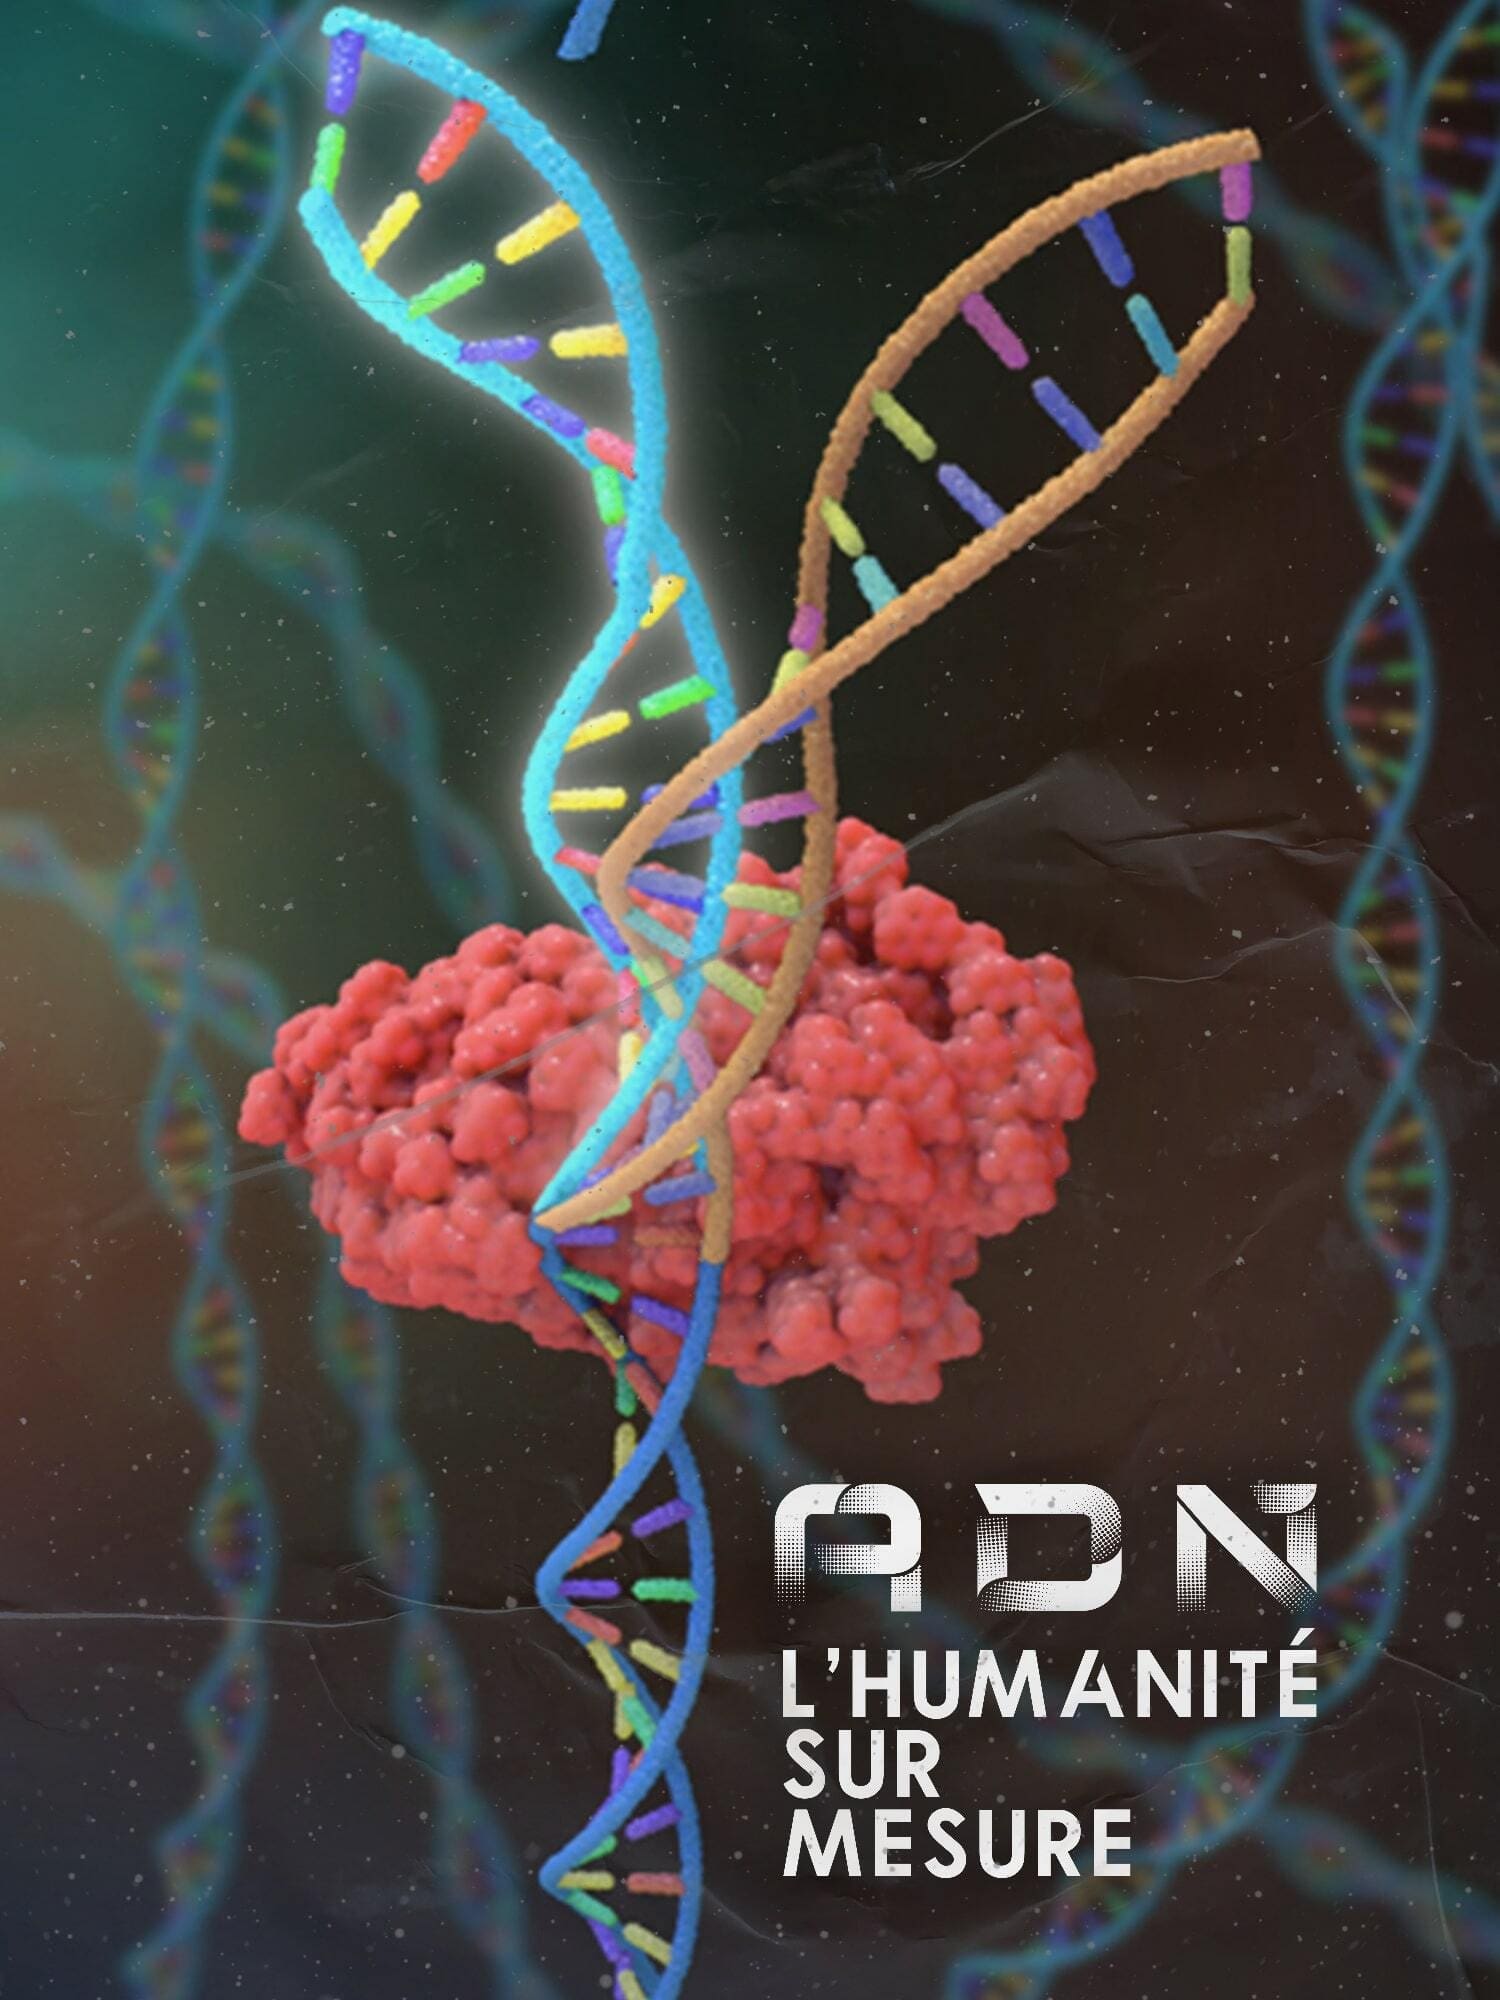 DNA: Custom Humanity